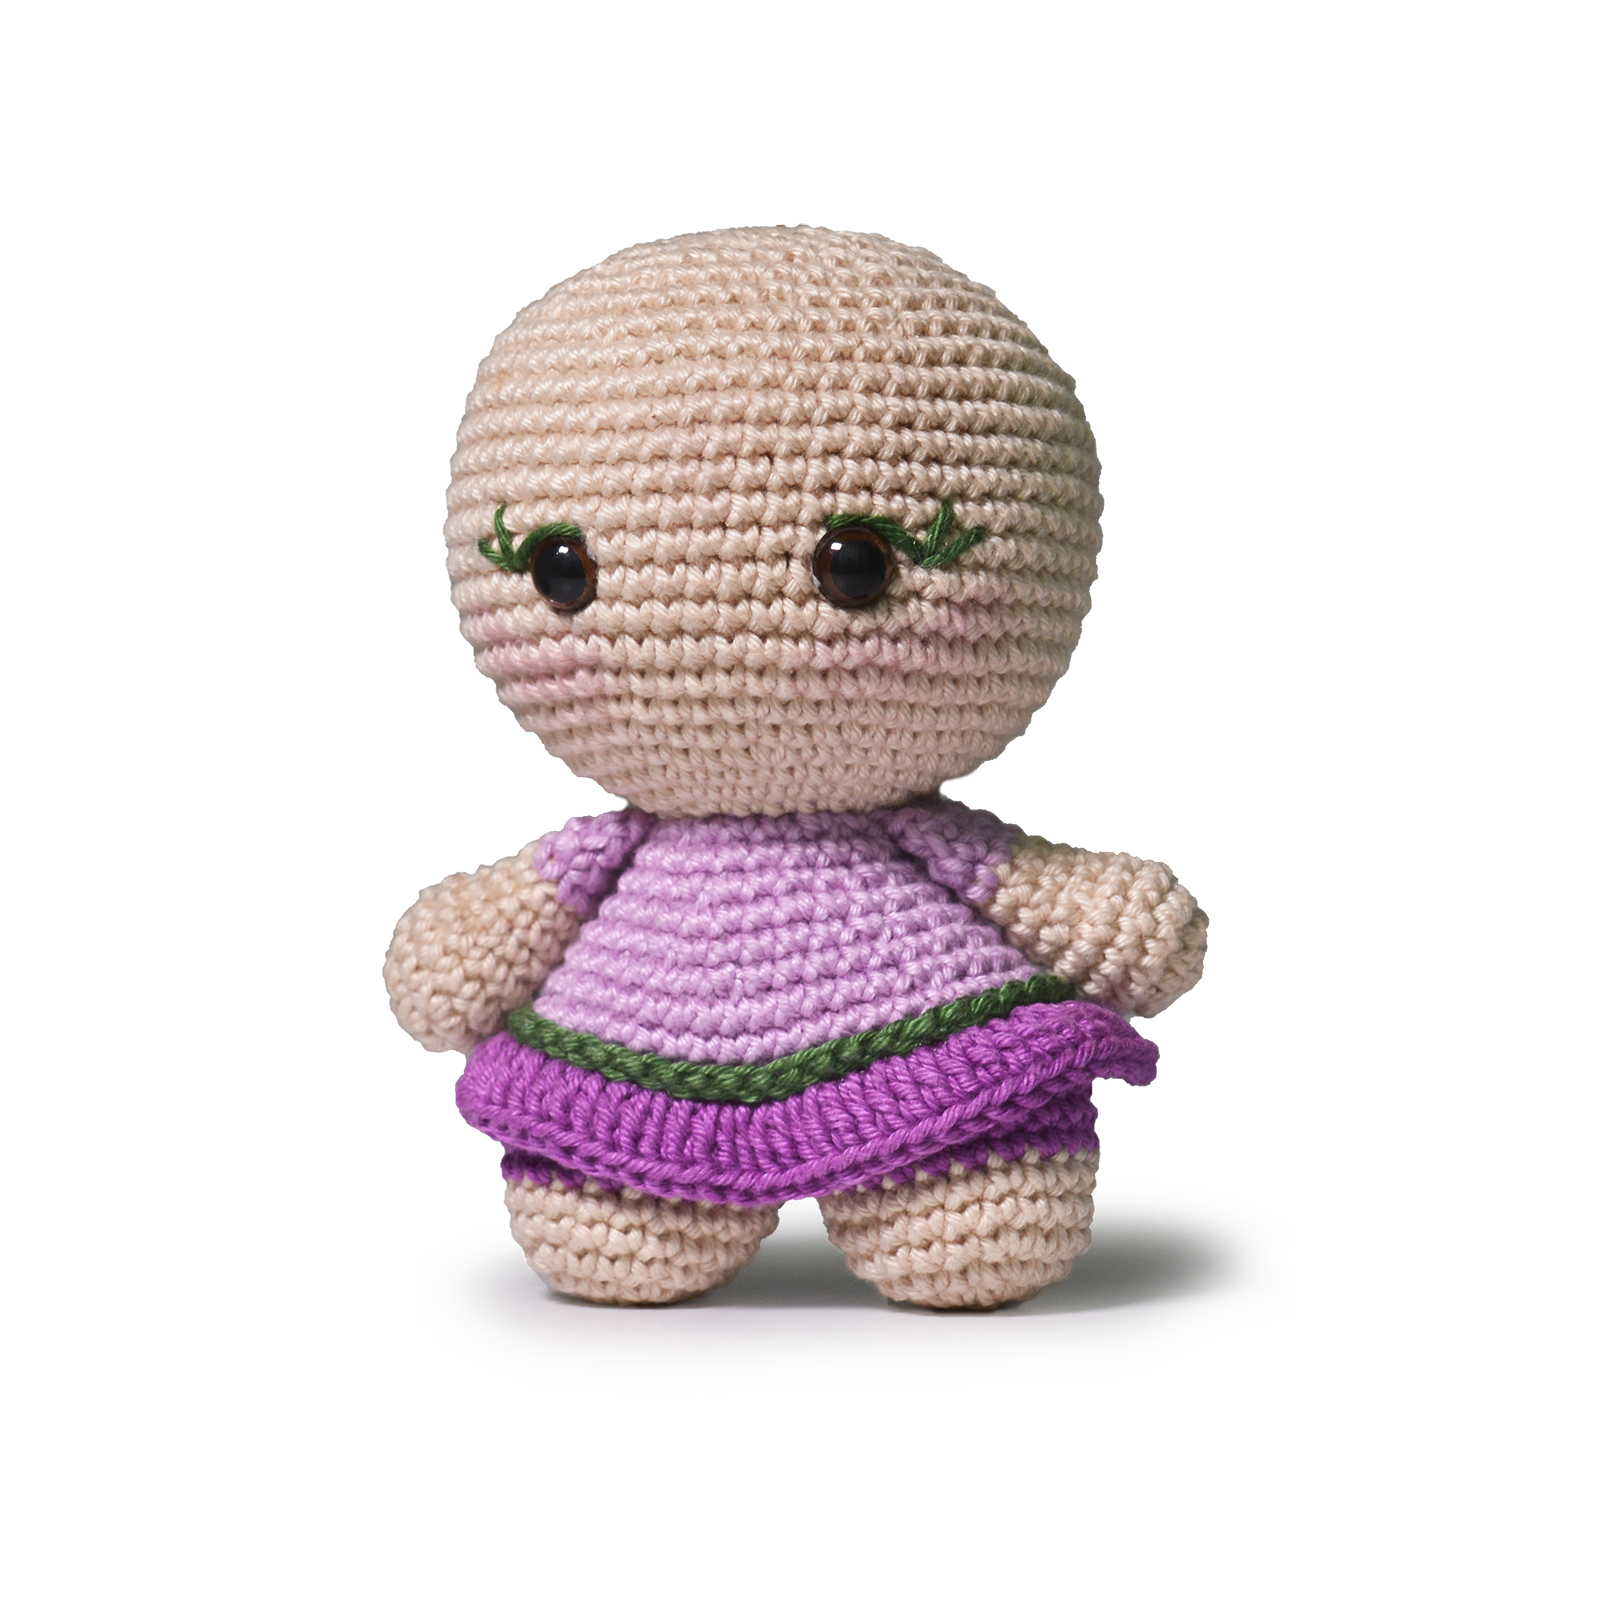 Amigurumi Too Cute 2 Crochet Kit (Intermediate)